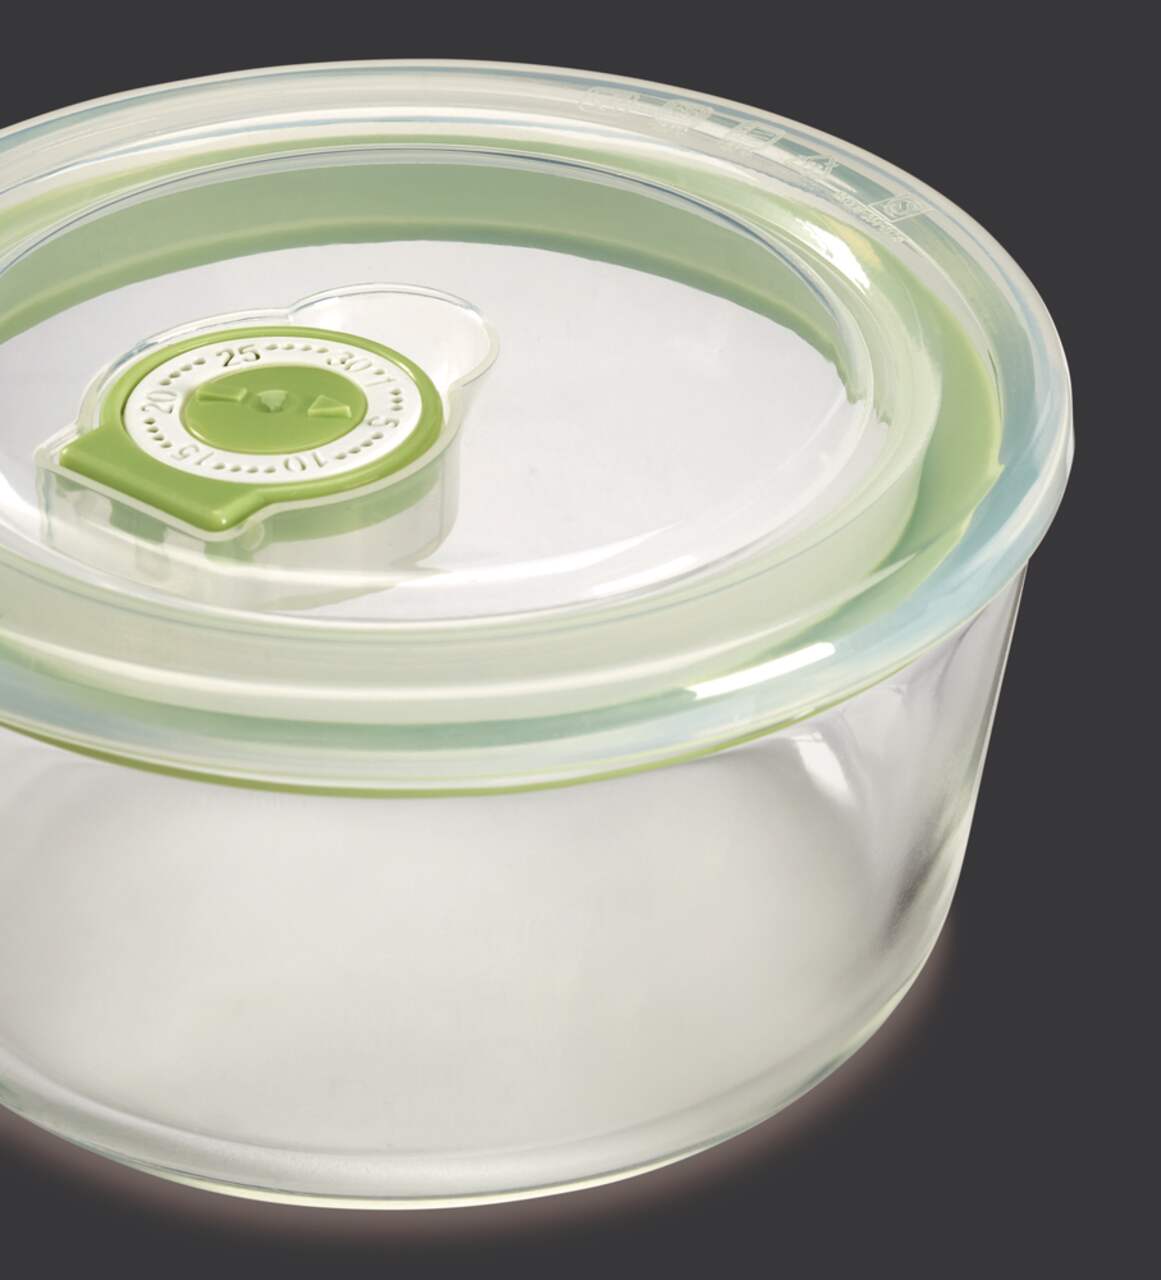 4-Cup Glass Food Storage Set – Vida by PADERNO